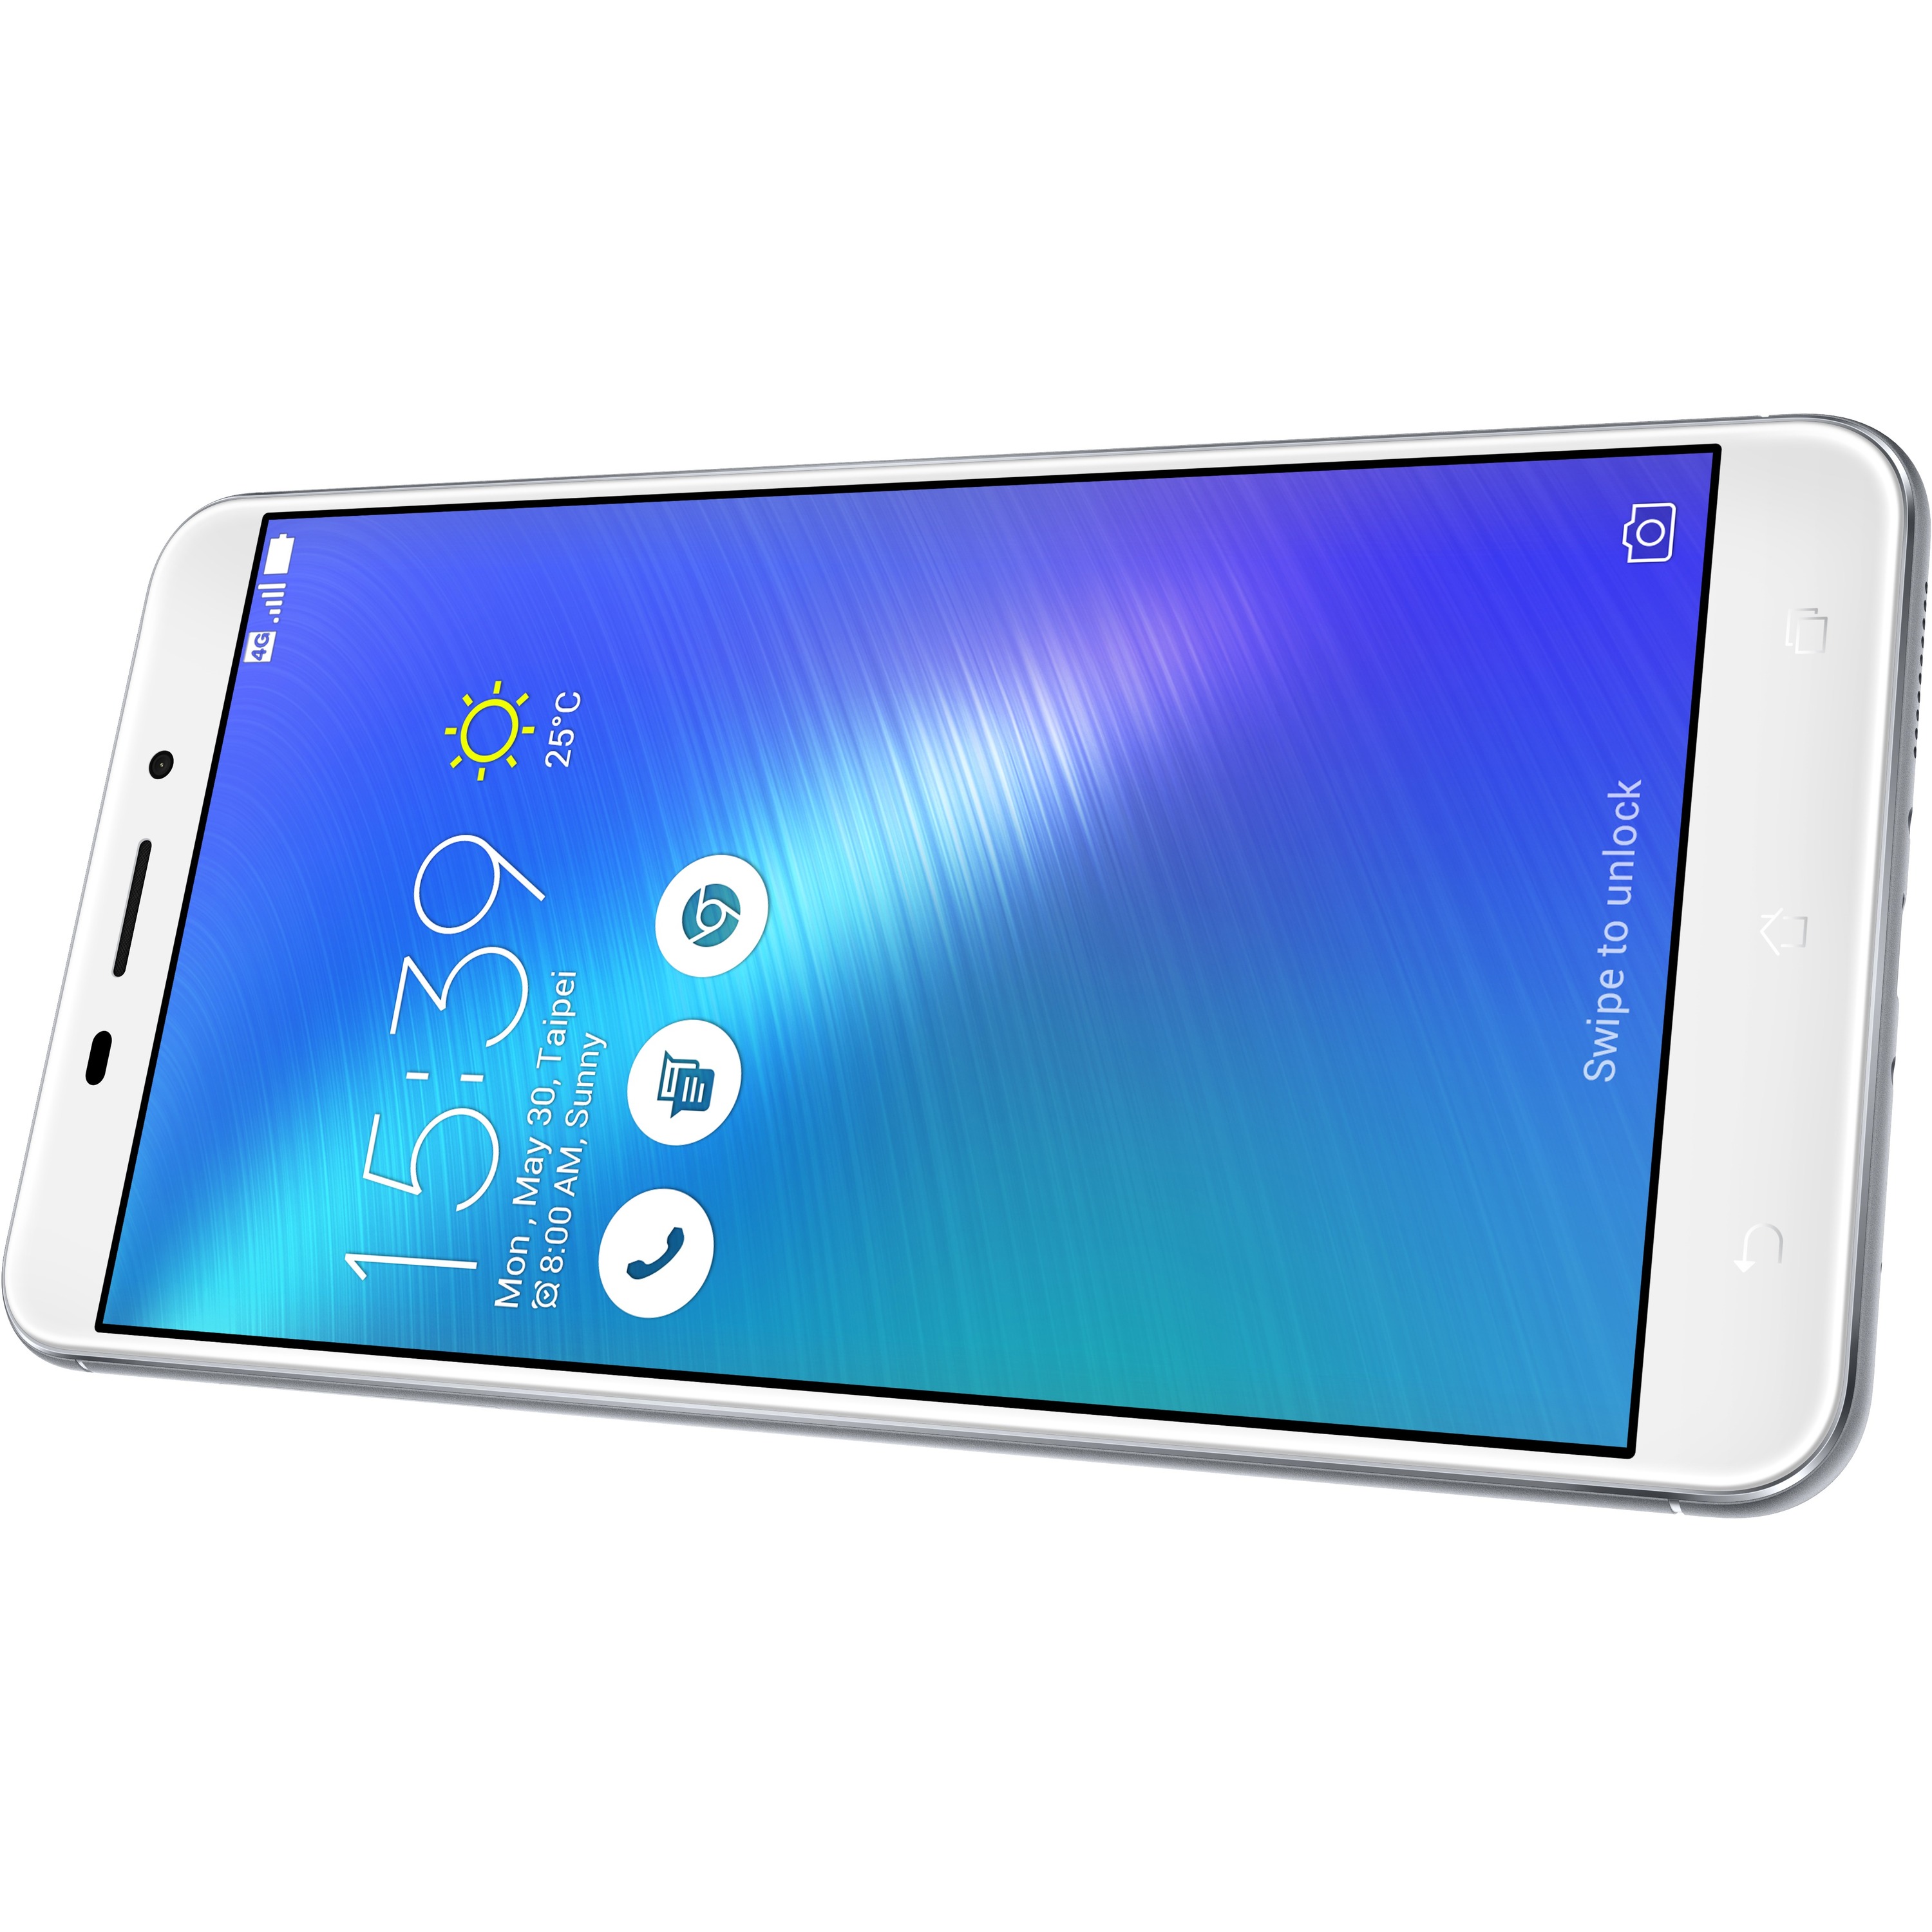 Asus Zenfone 3 Laser Zc551kl 32 Gb Smartphone 5 5 Lcd Full Hd 19 X 1080 2 Gb Ram Android 6 0 Marshmallow 4g Glacier Silver Caretek Information Technology Solutions